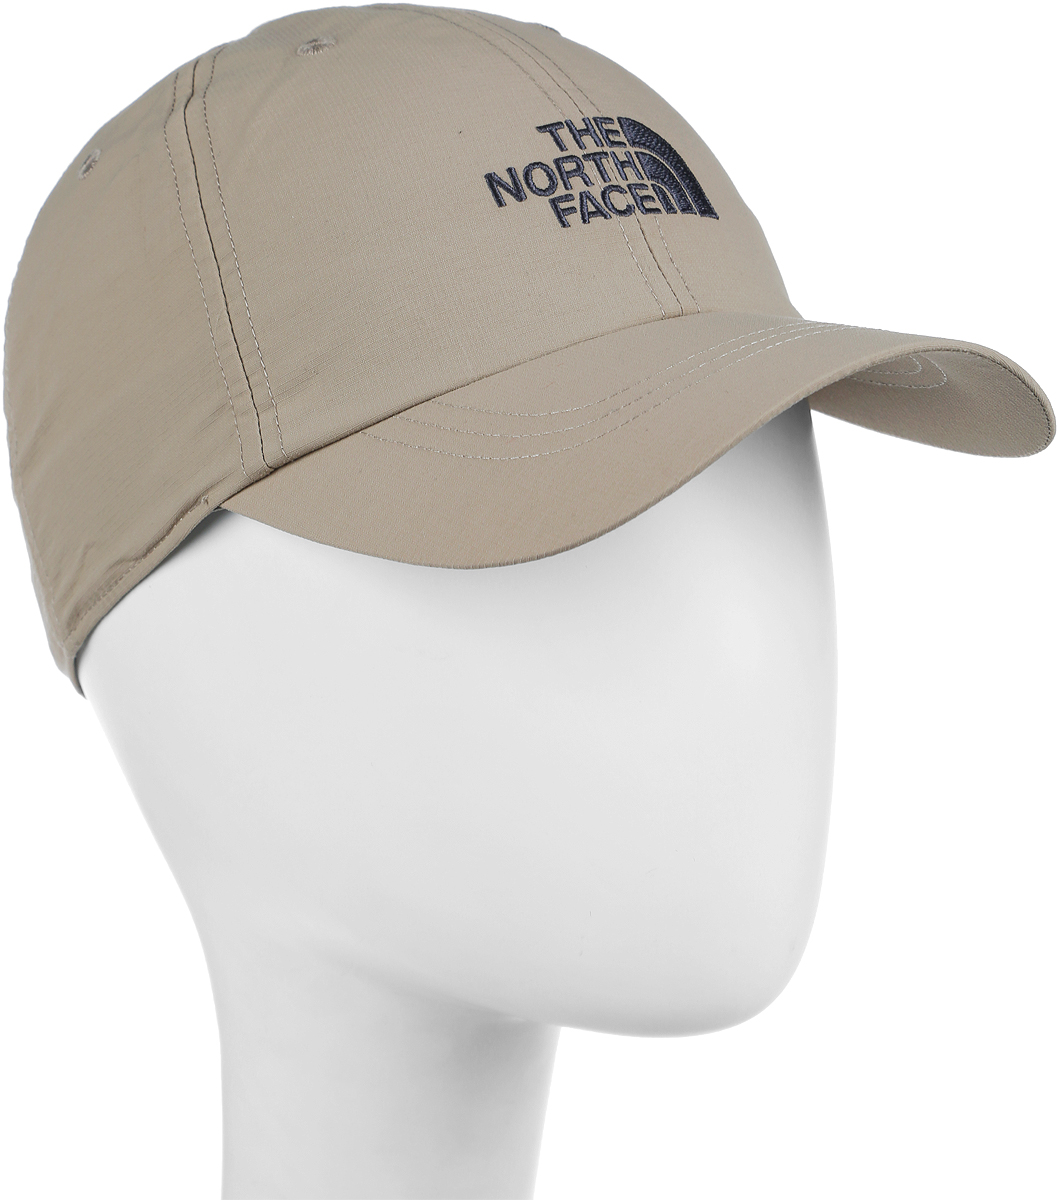 Бейсболка The North Face Horizon Hat, цвет: бежевый. T0CF7W0SS. Размер L/XL (59)